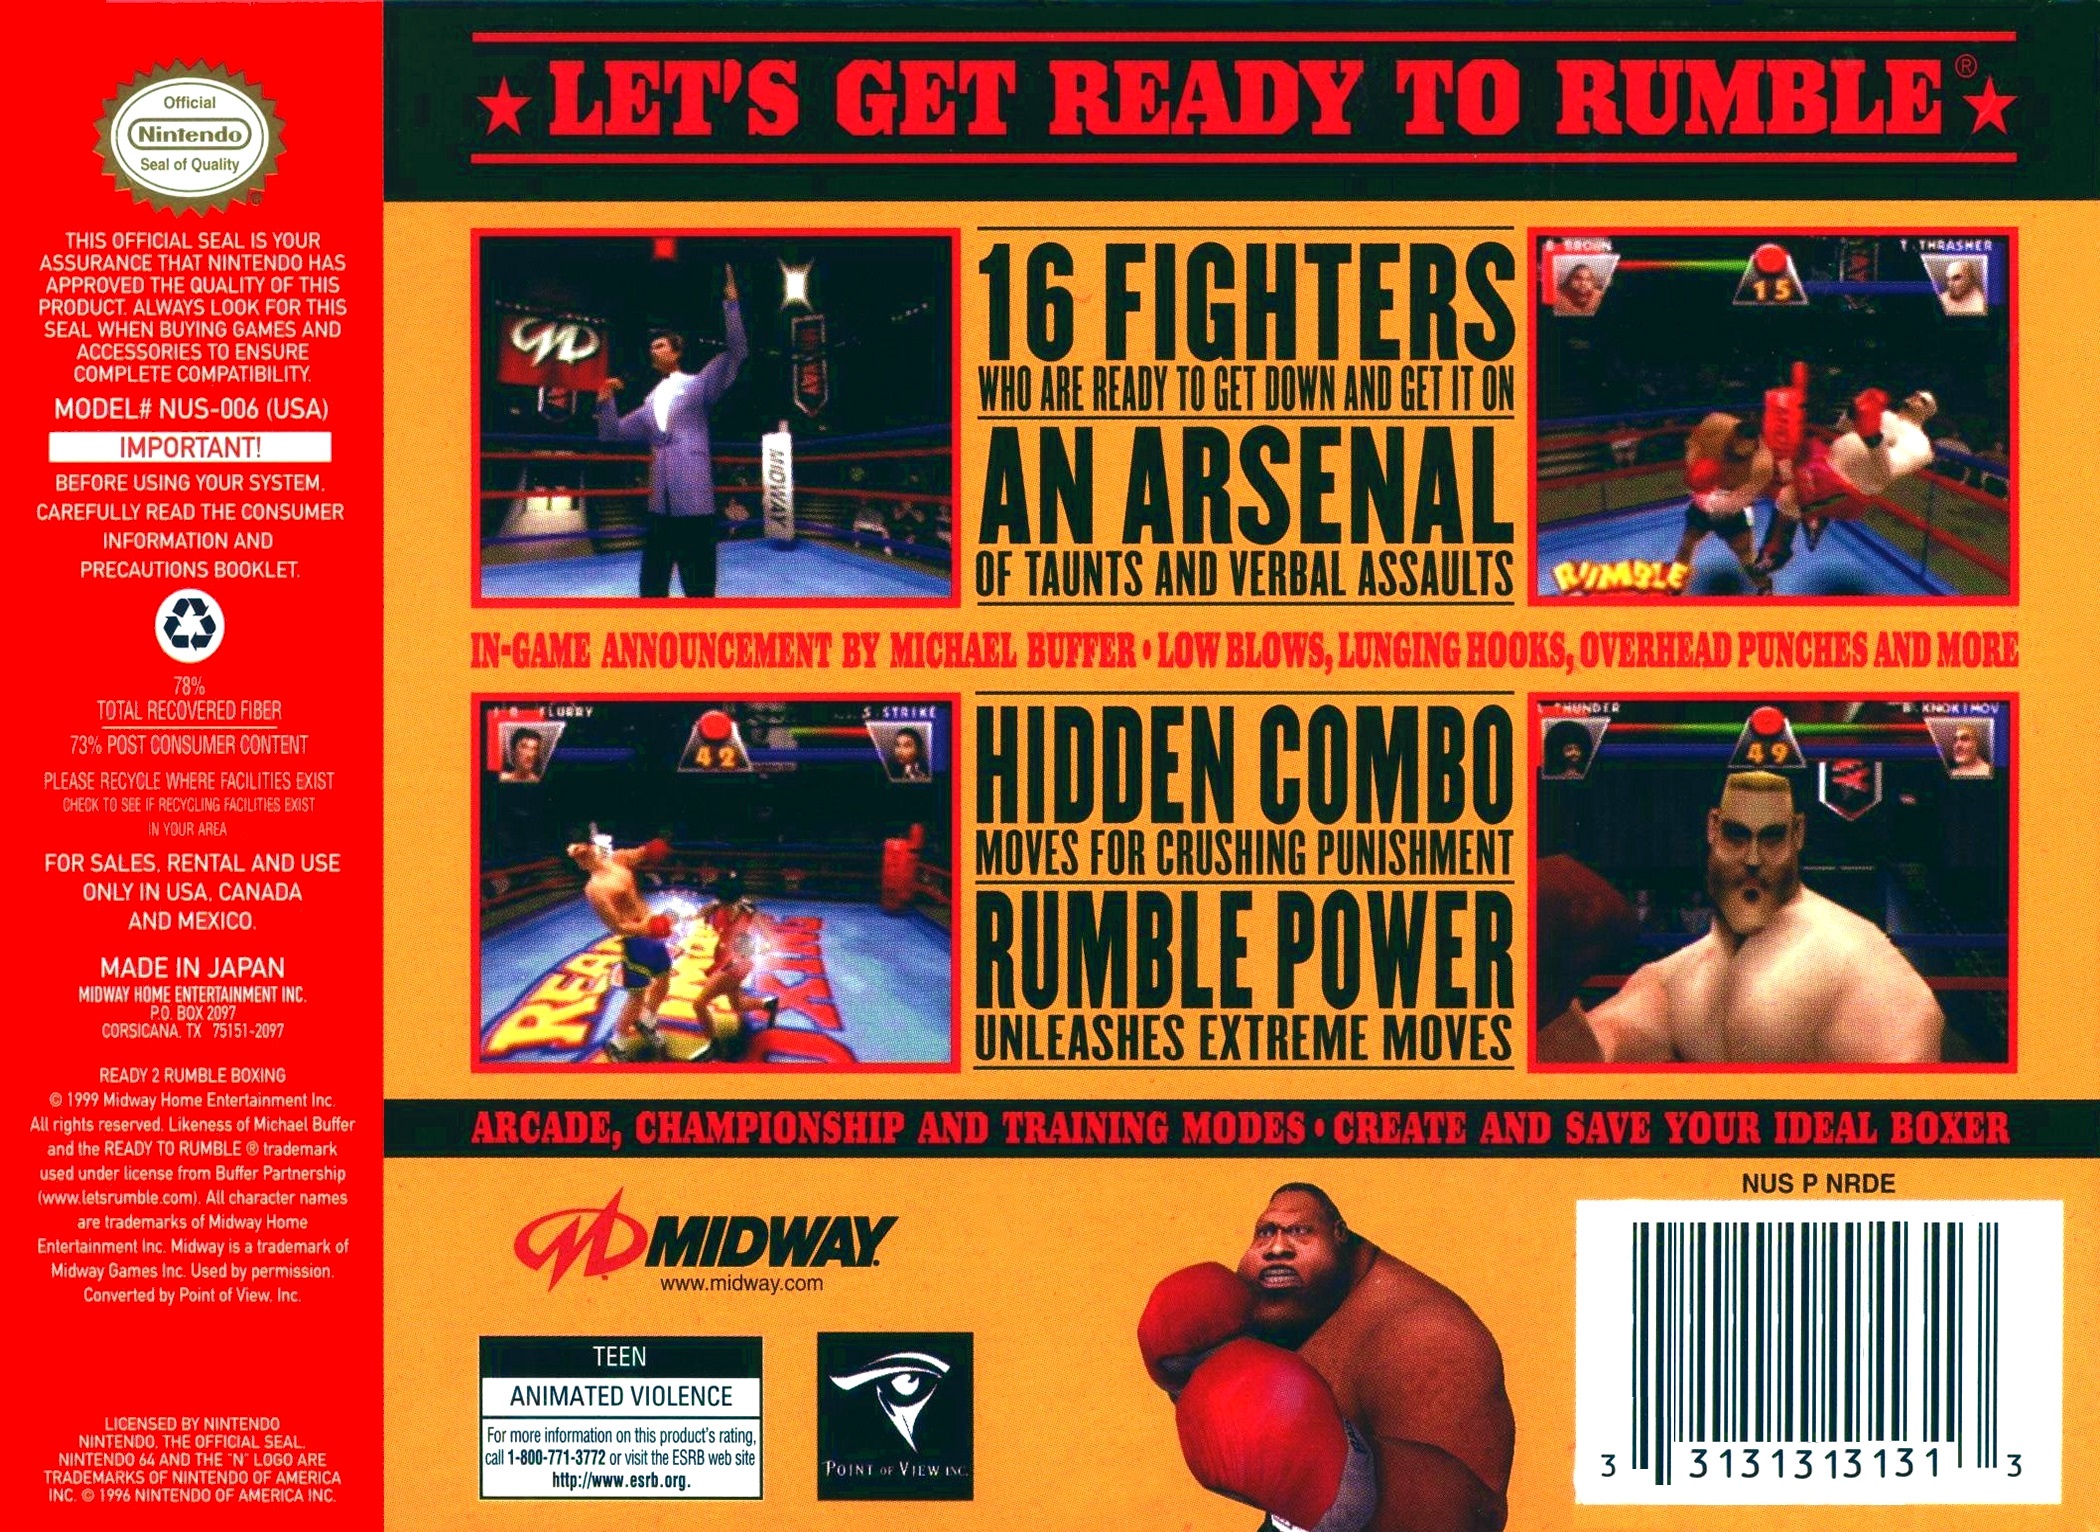 Nintendo boxing. Ready 2 Rumble Boxing. Ready 2 Rumble Boxing: Round 2 ps2. Ready 2 Rumble Boxing 1 ps1. Unlock all Boxers ready 2 Rumble Boxing.